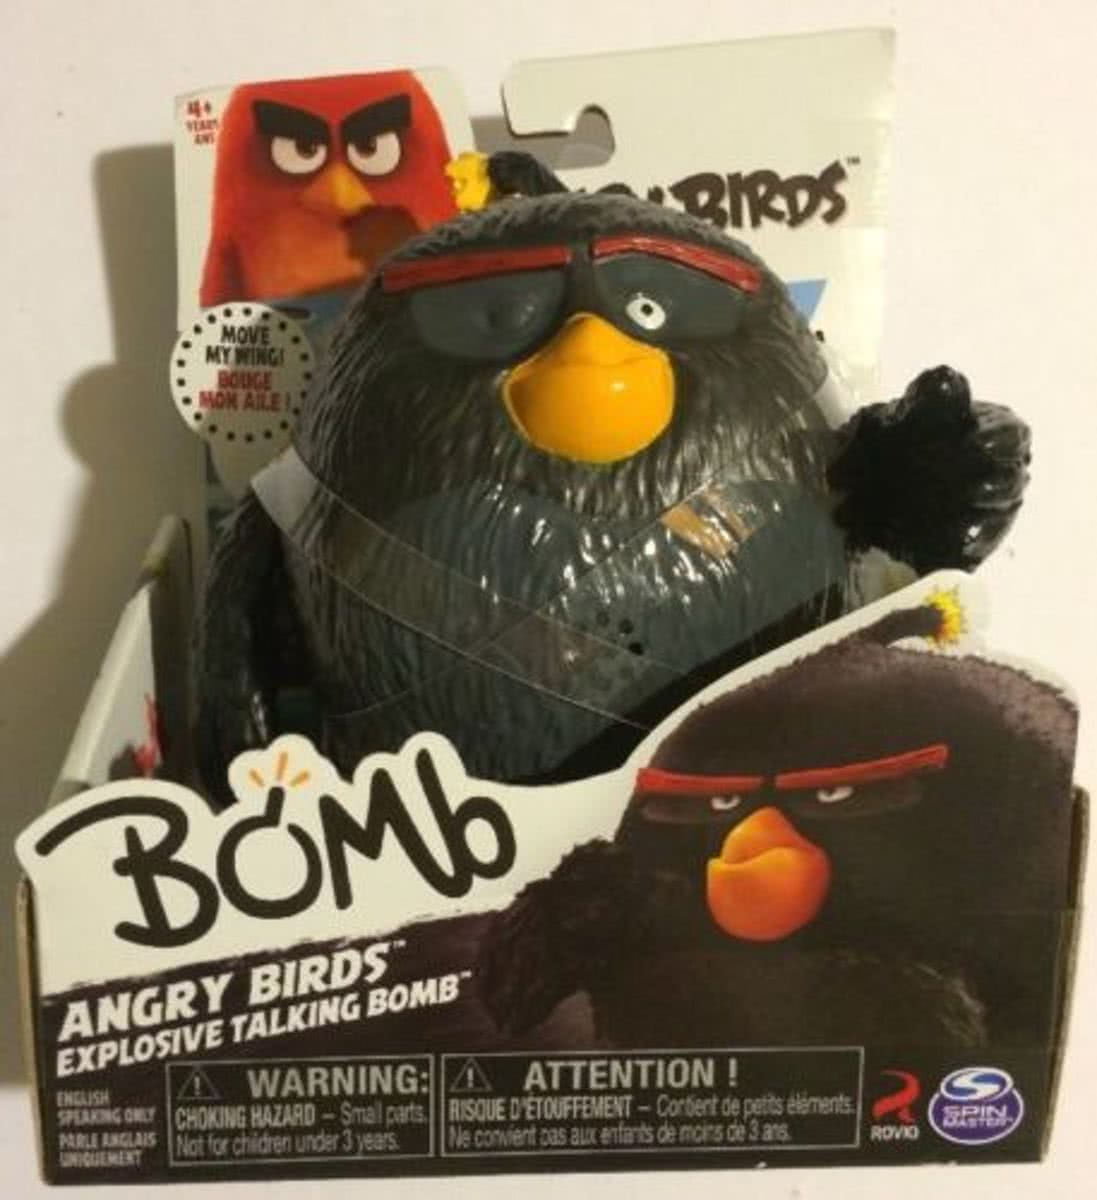 Angry Birds Explosive Talking Bomb